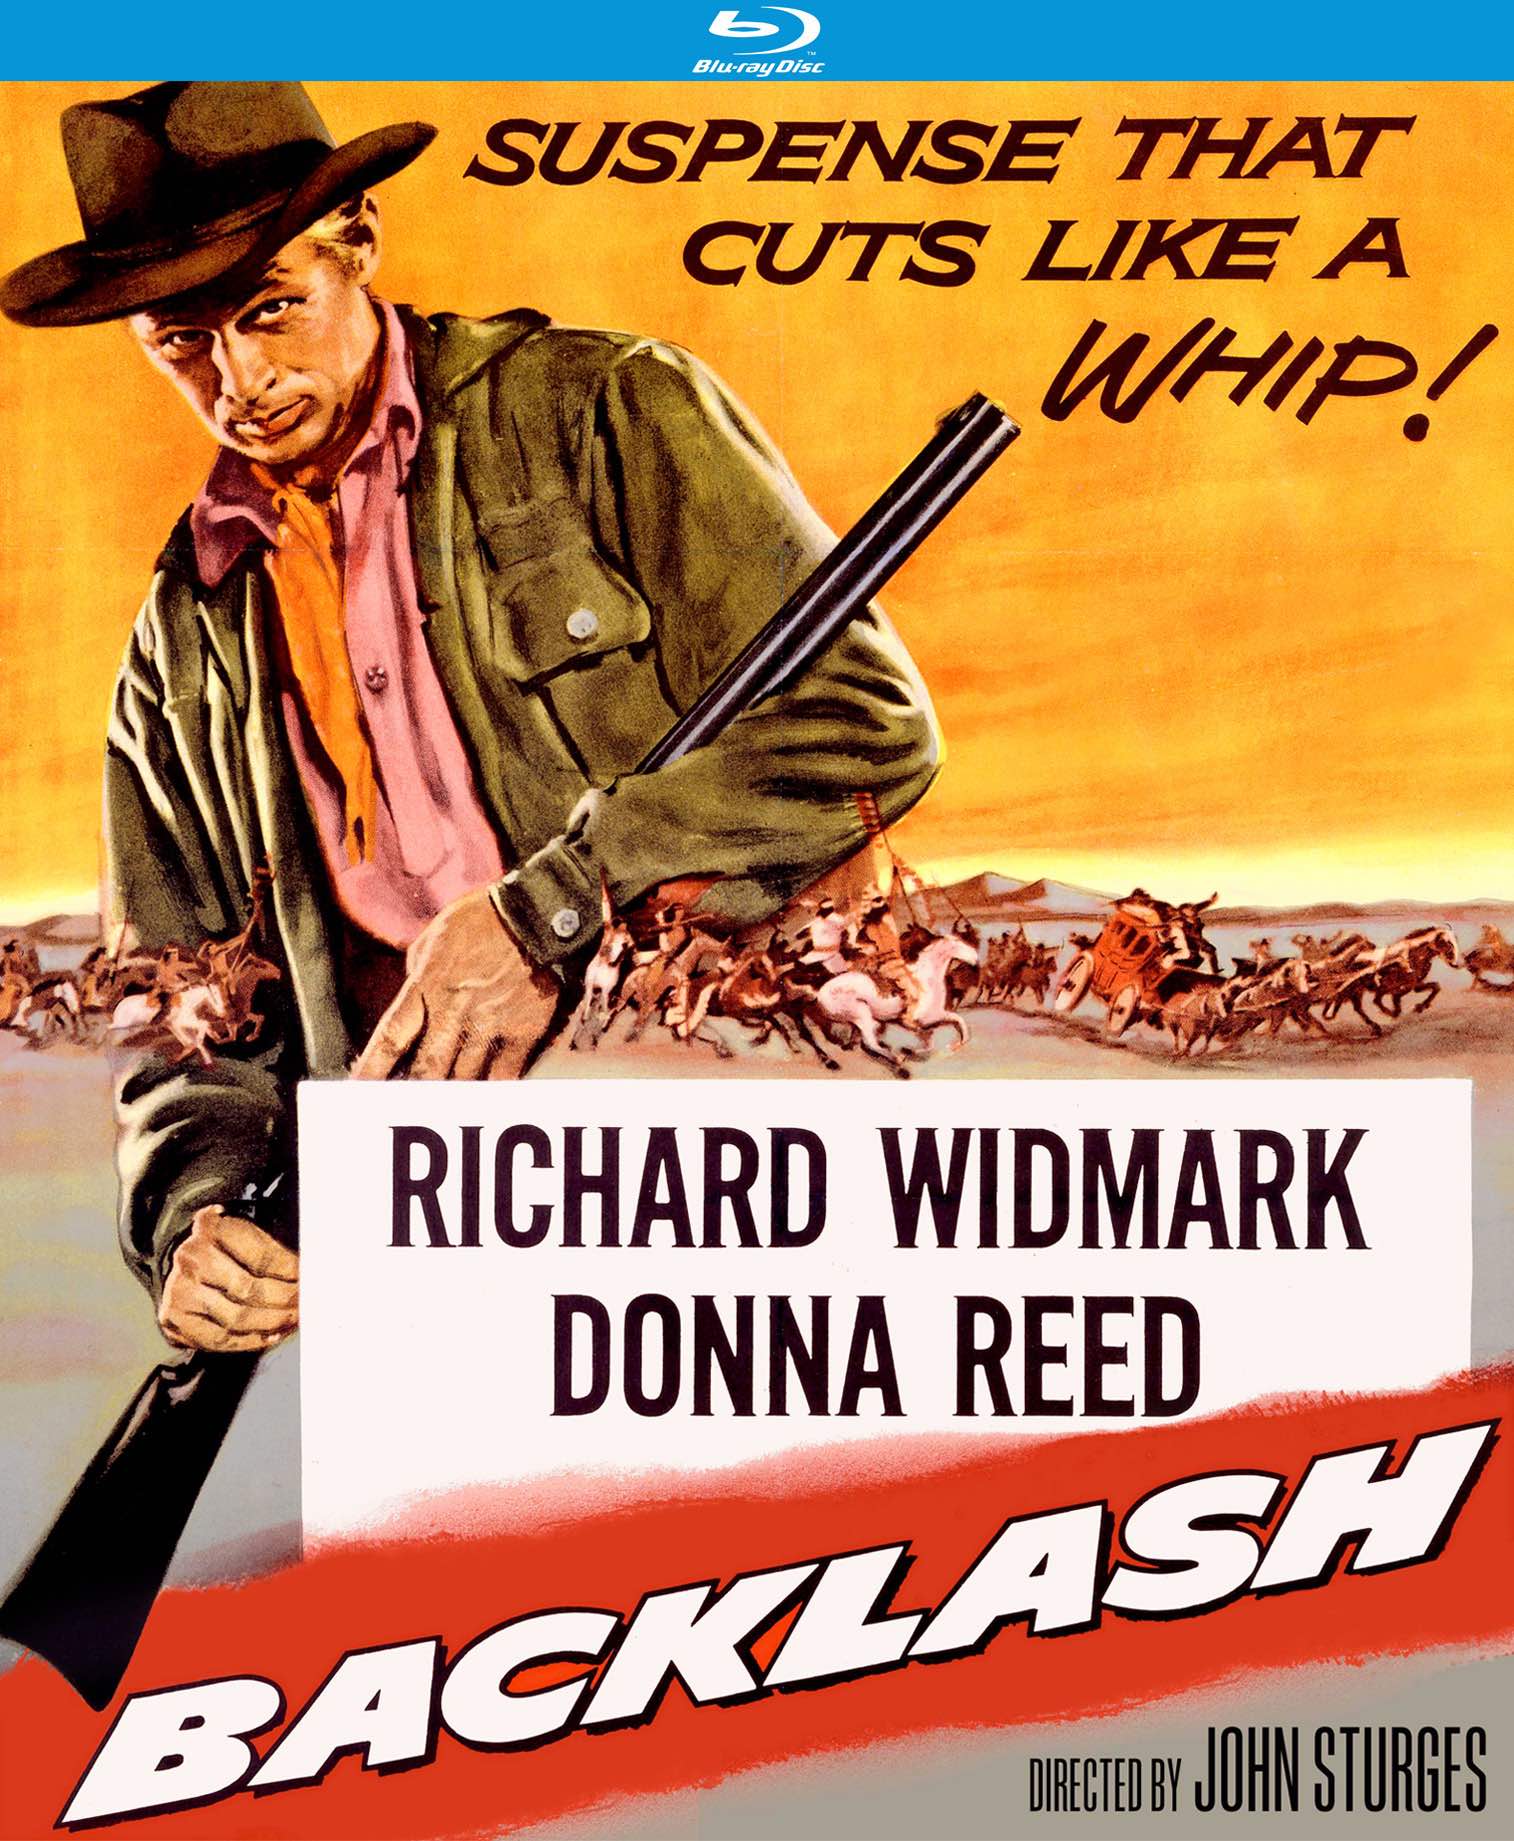 Backlash [Blu-ray] [1956]